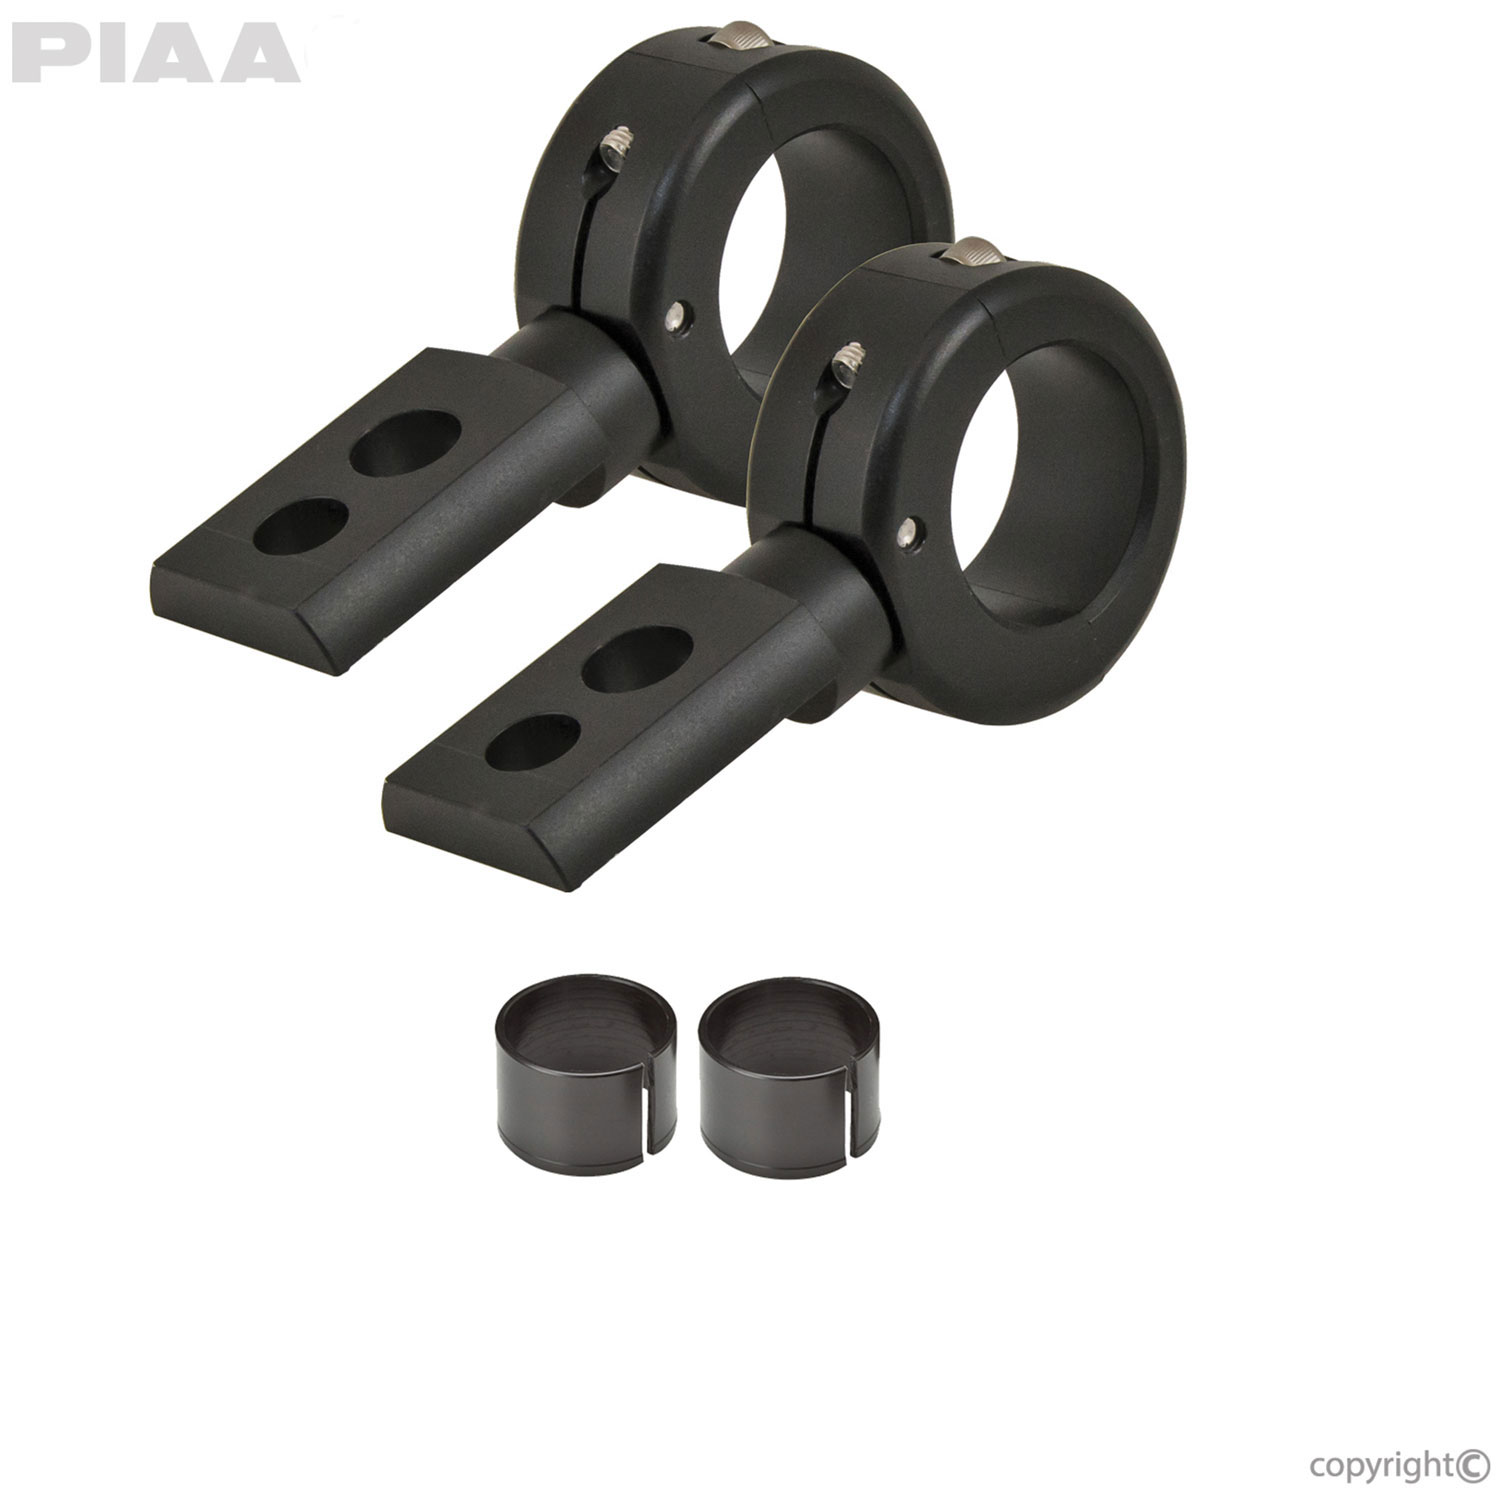 PIAA  PIAA 360 Universal Mounting Bracket Fits 1-1/2 & 1-3/4 Inch Bars or  Tubes #30744